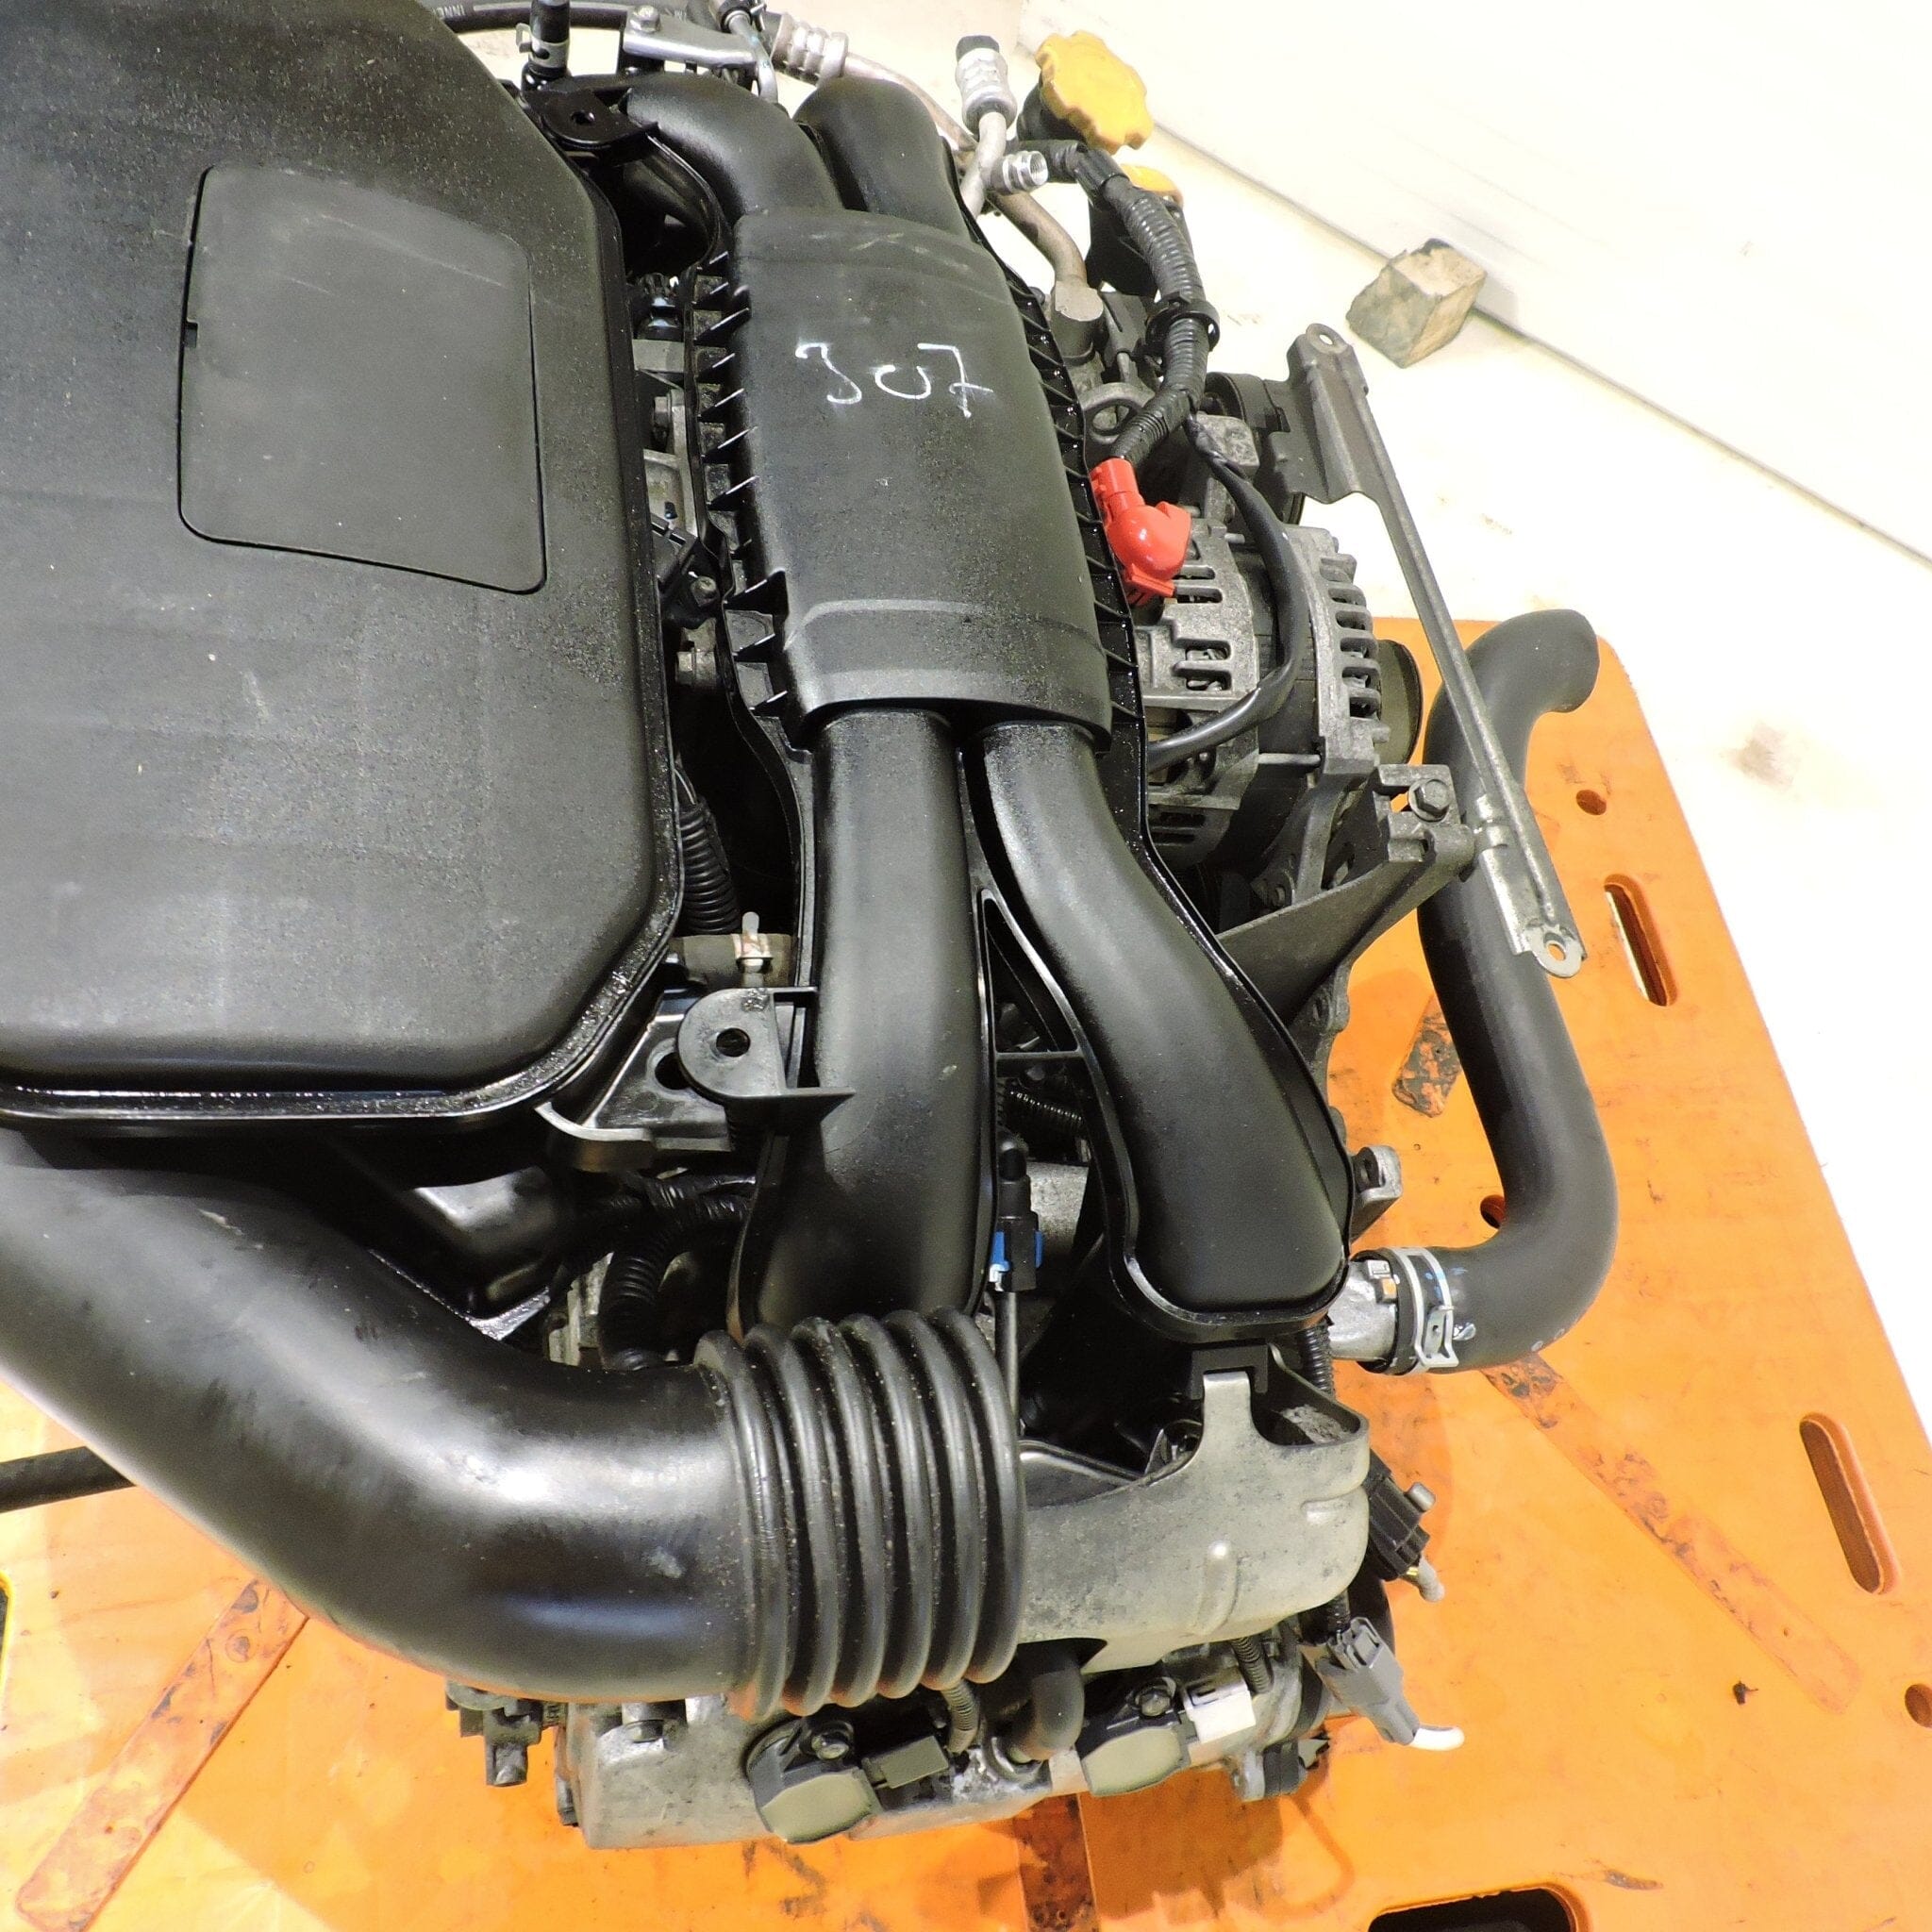 Subaru Outback 2010-2011 2.5L Jdm Engine - EJ25 Sohc